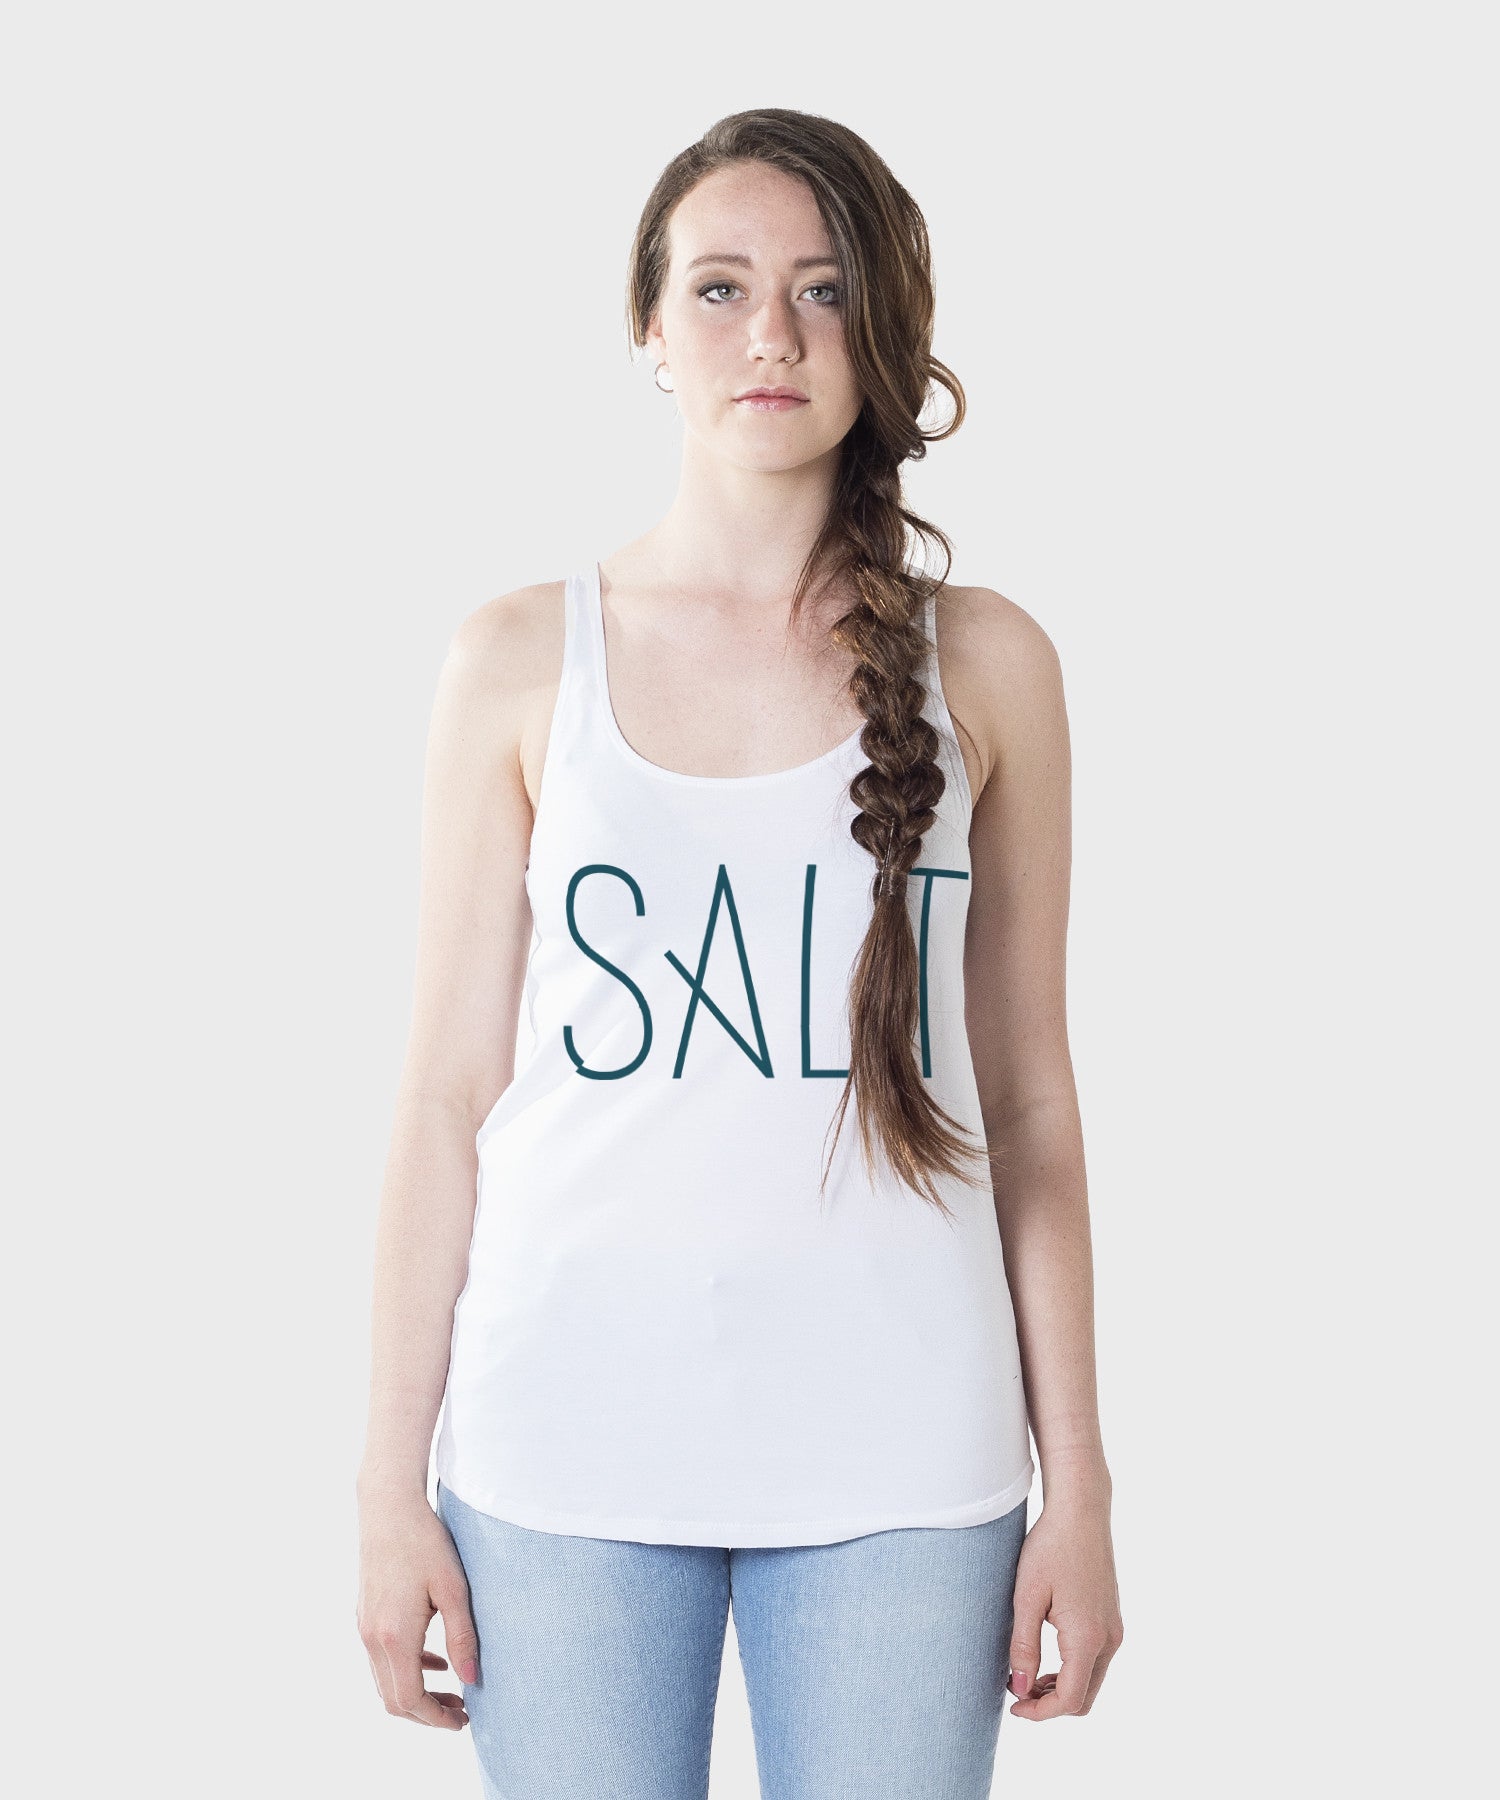 Lana Tank  |  SALT